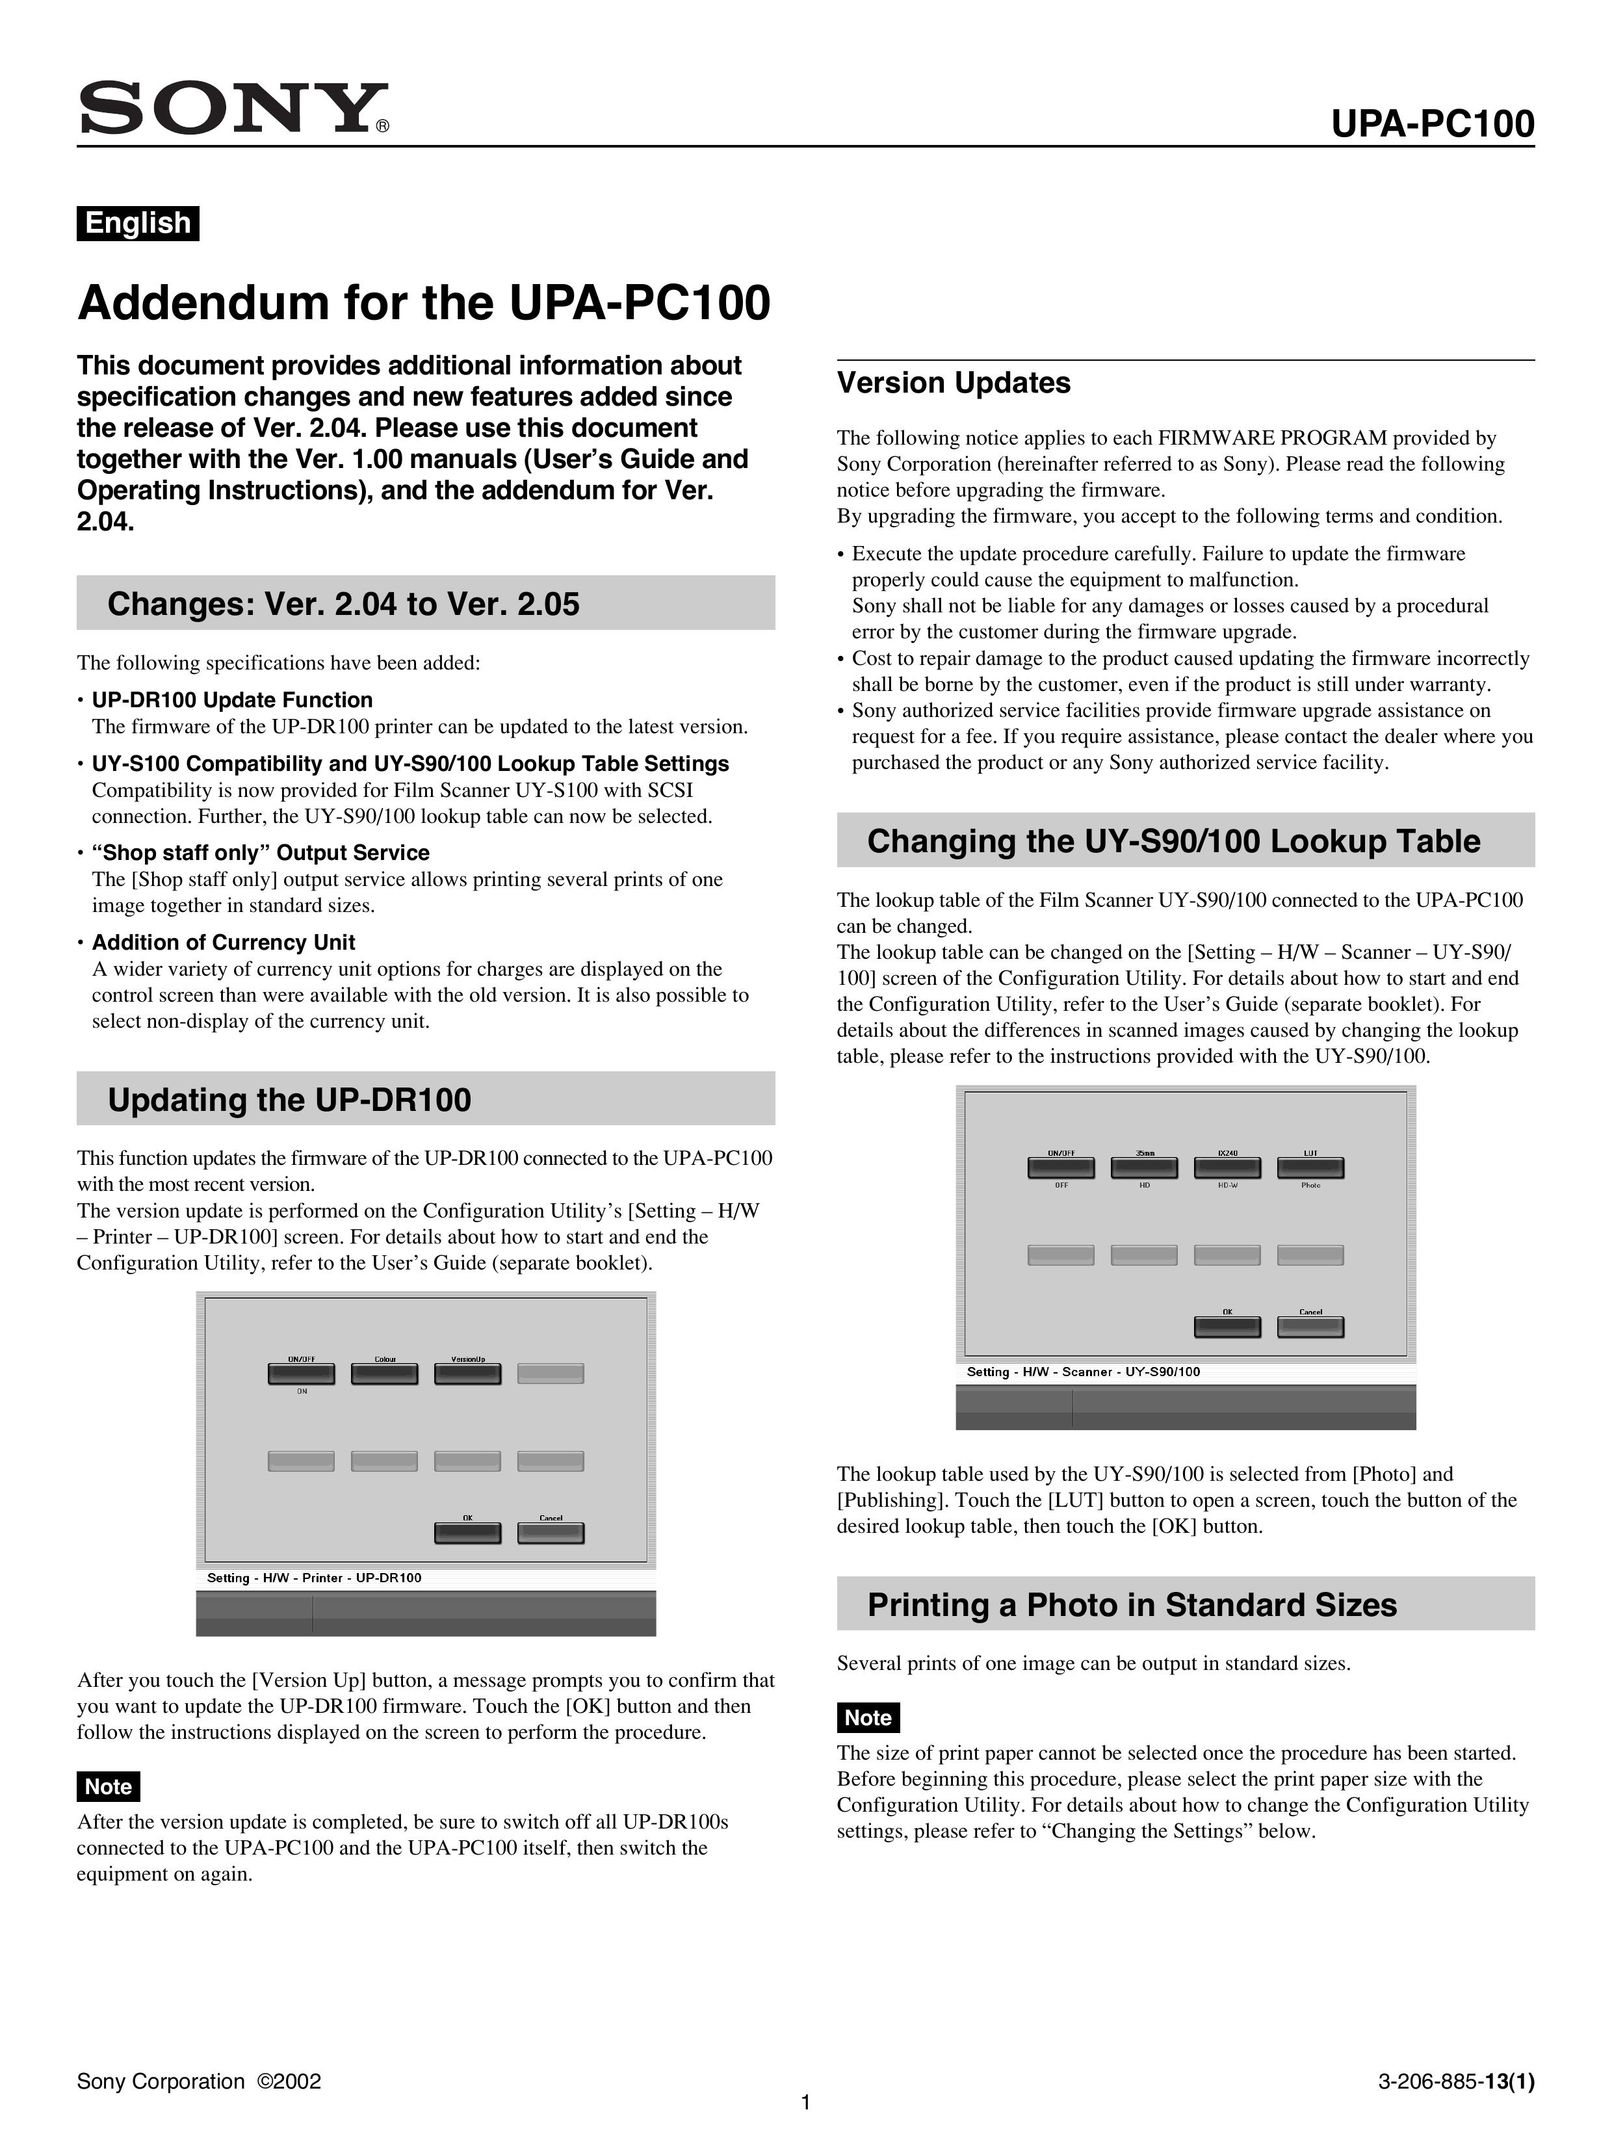 Sony UPA-PC100 Printer User Manual